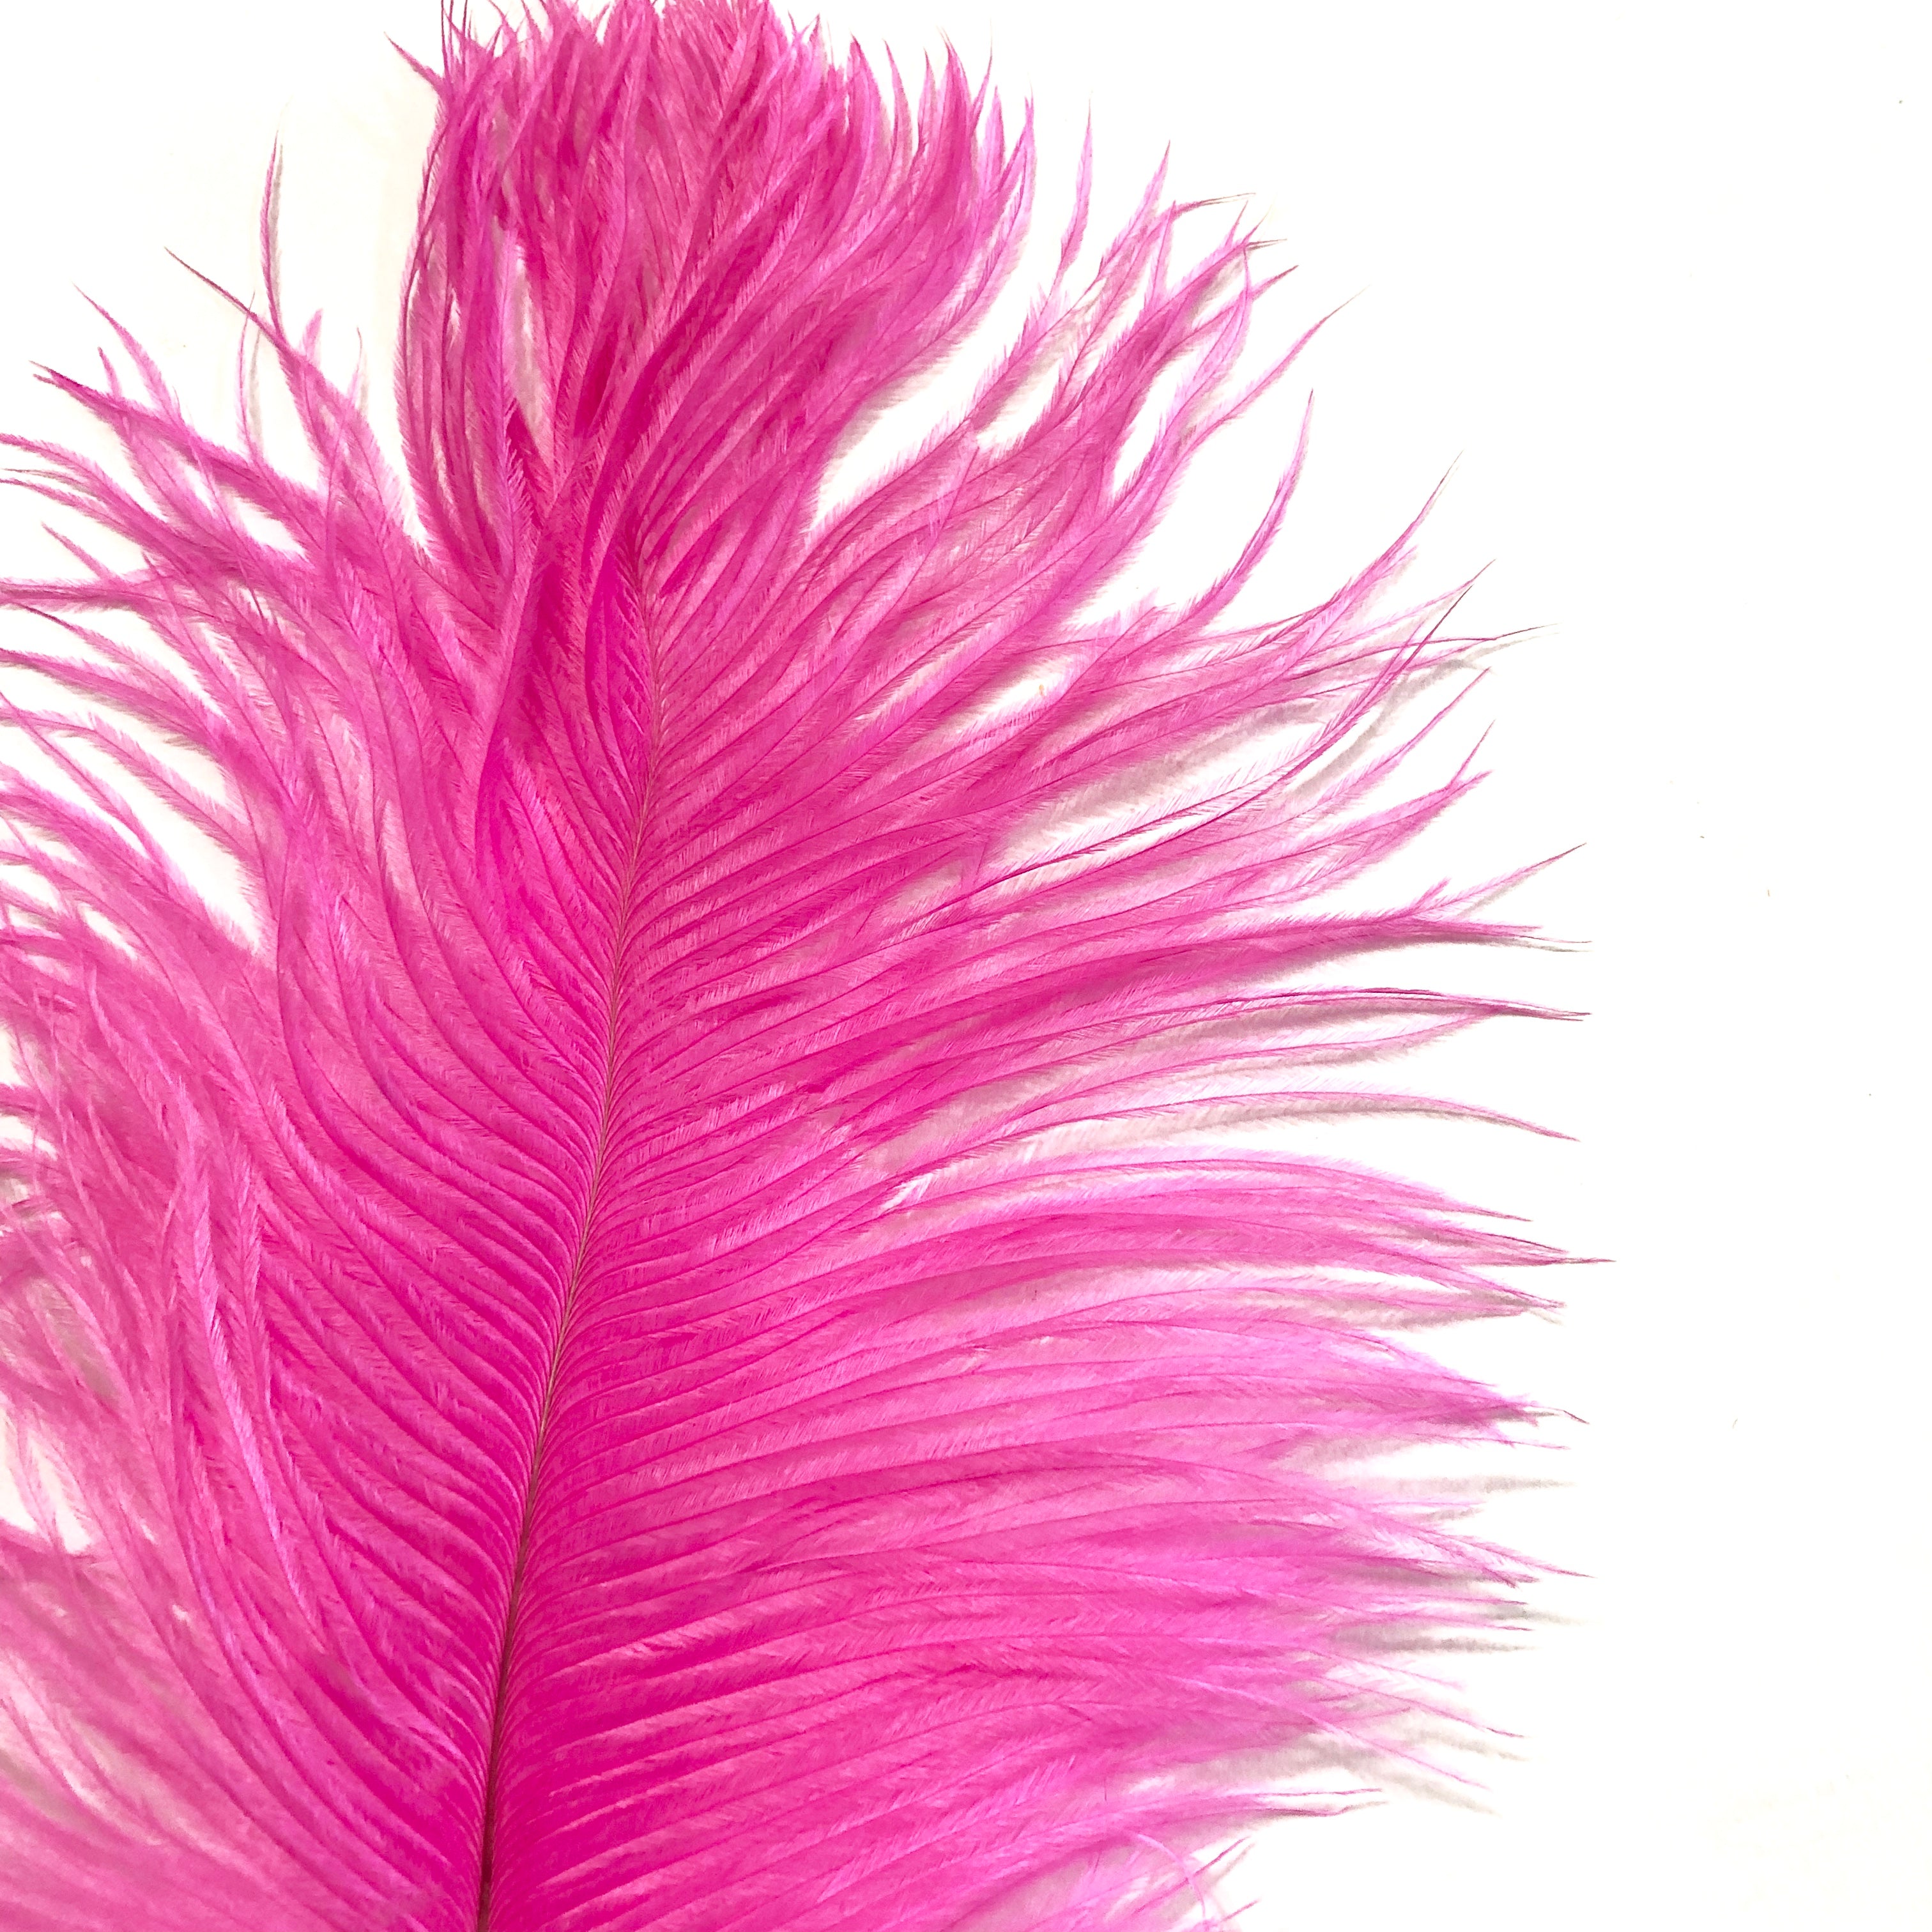 Ostrich Feather Drab 37-42cm x 5 pcs - Hot Pink ((SECONDS))